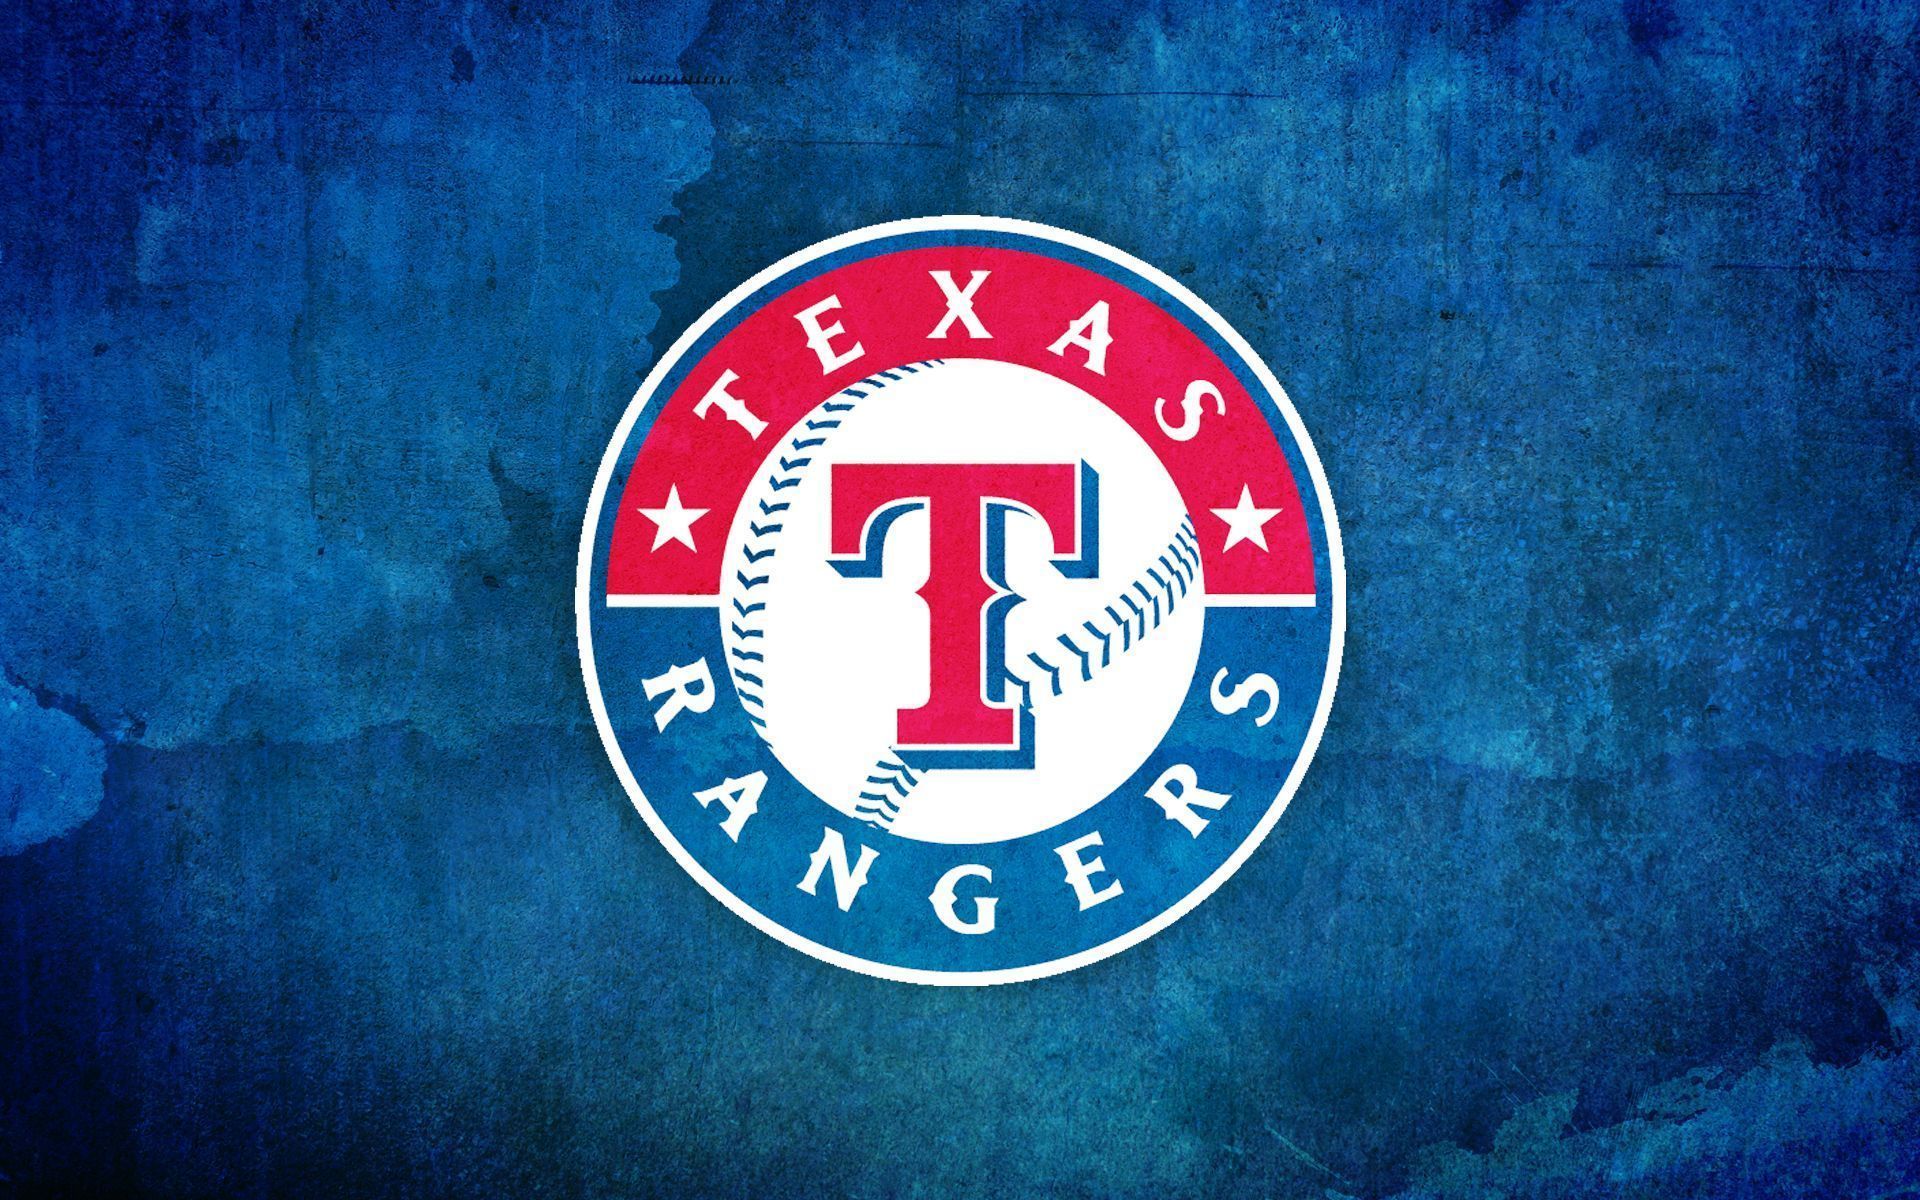 Texas Rangers HD Wallpapers